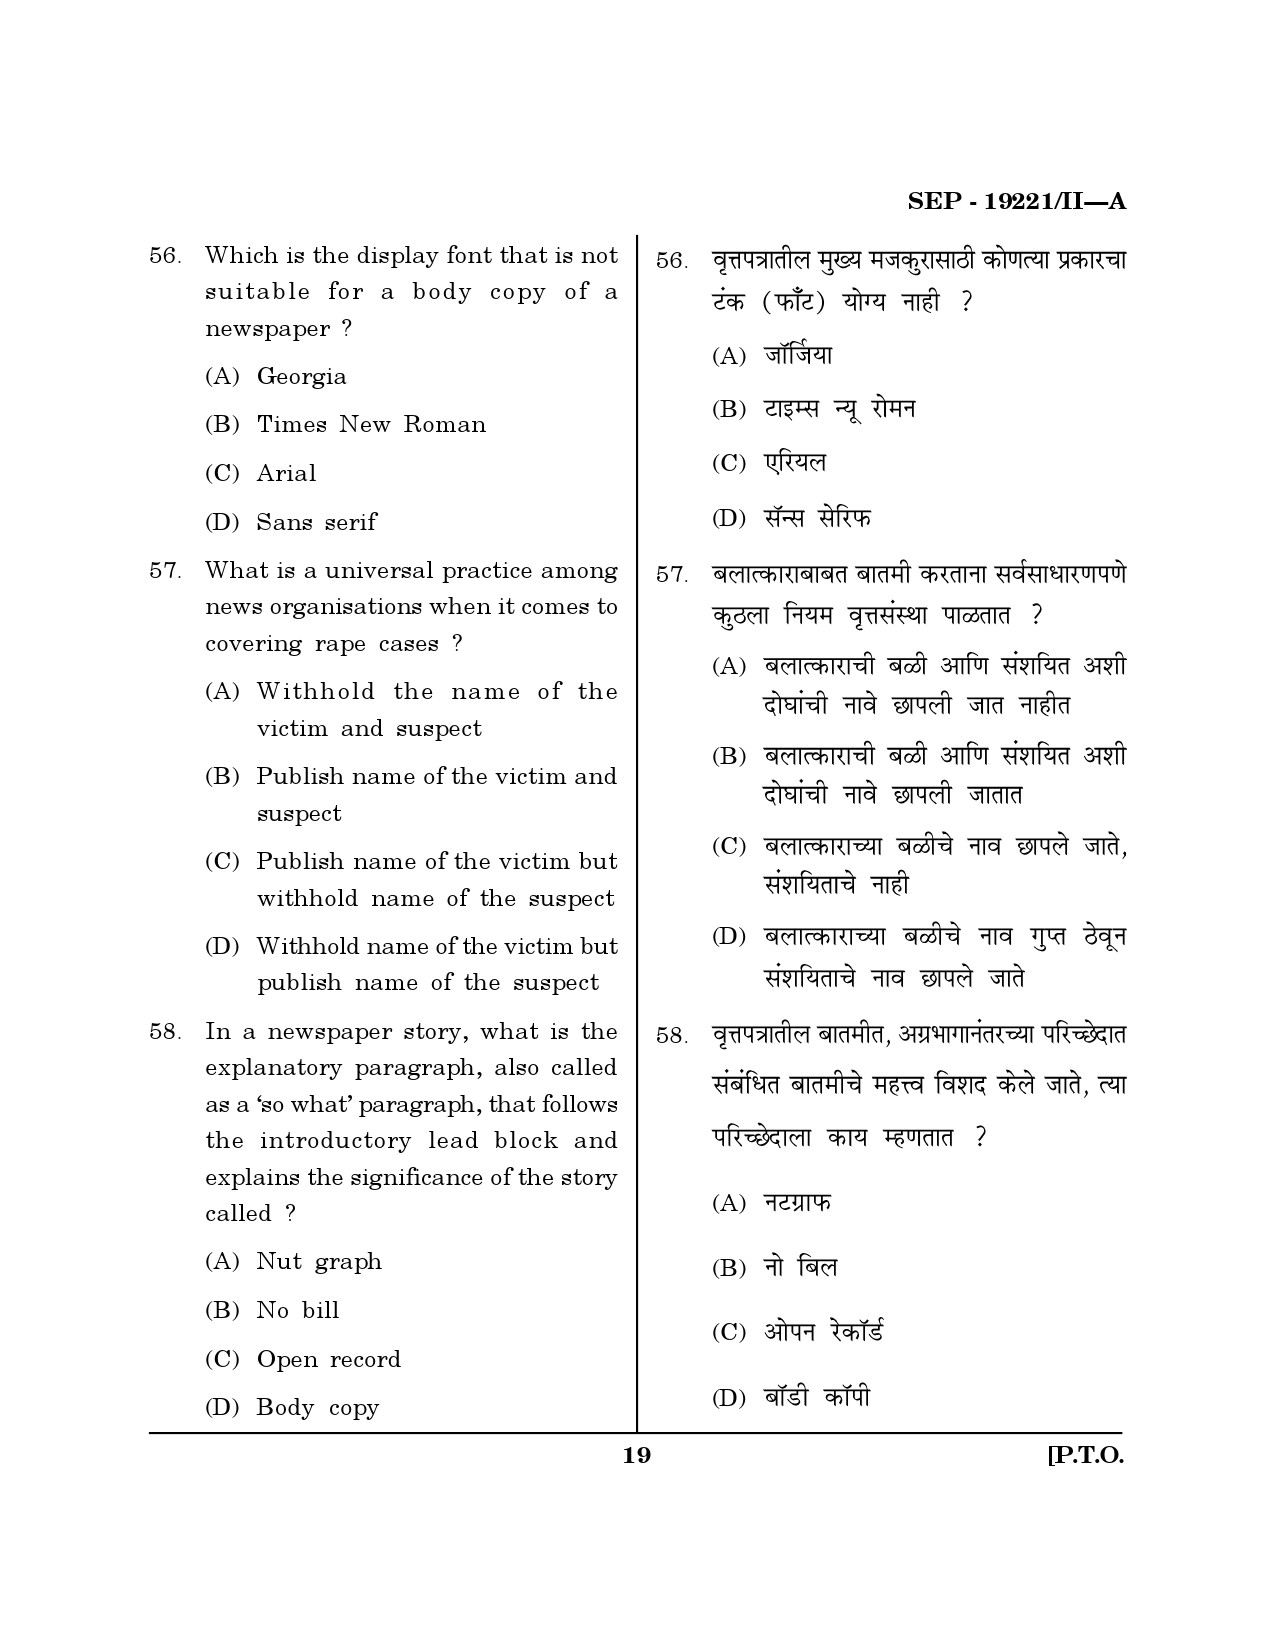 Maharashtra SET Journalism and Mass Communication Exam Question Paper September 2021 18